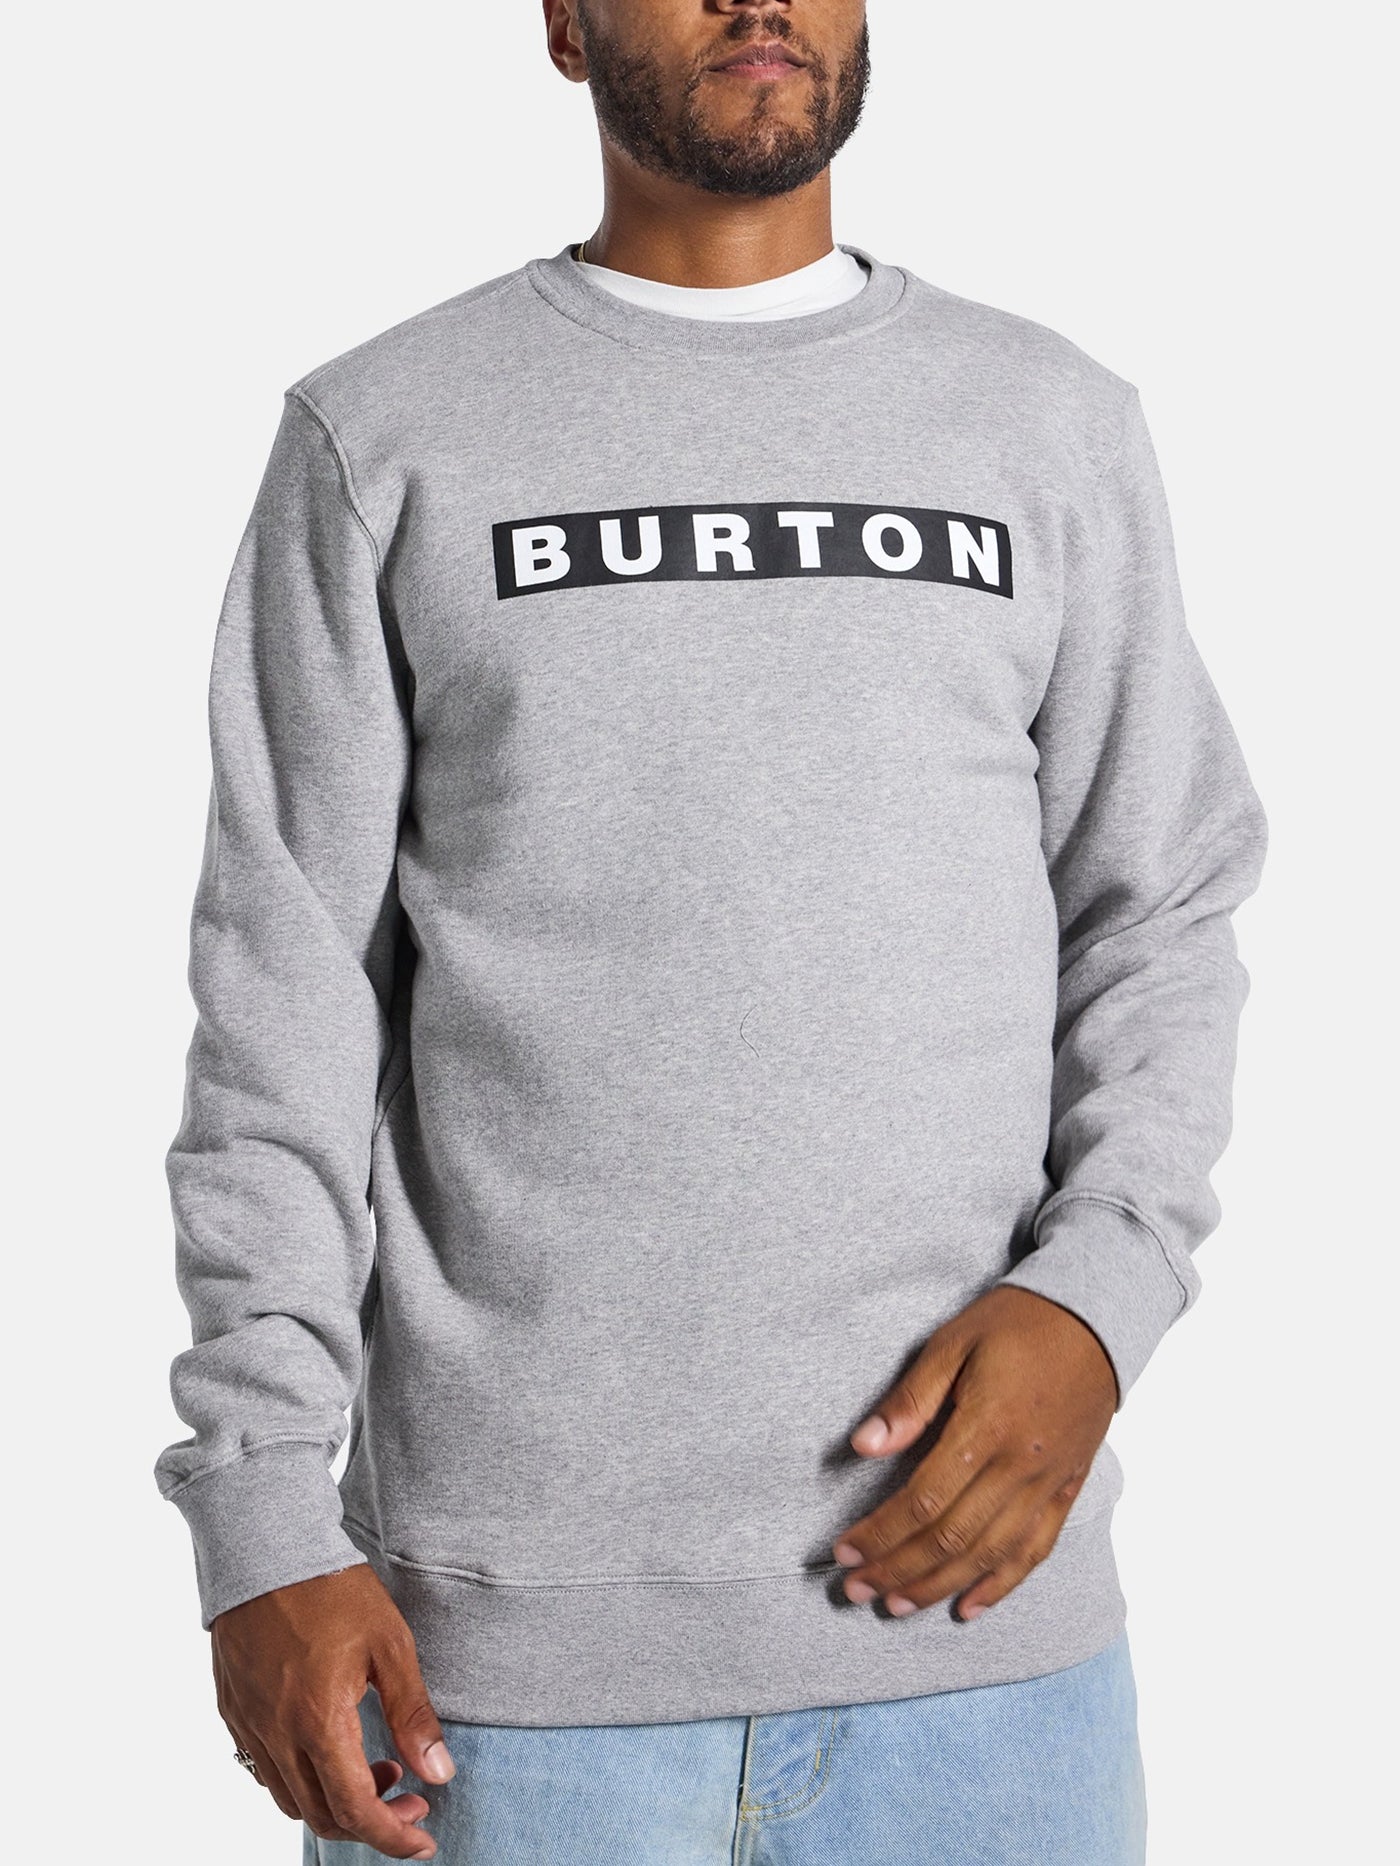 Burton Vault Crewneck Sweatshirt